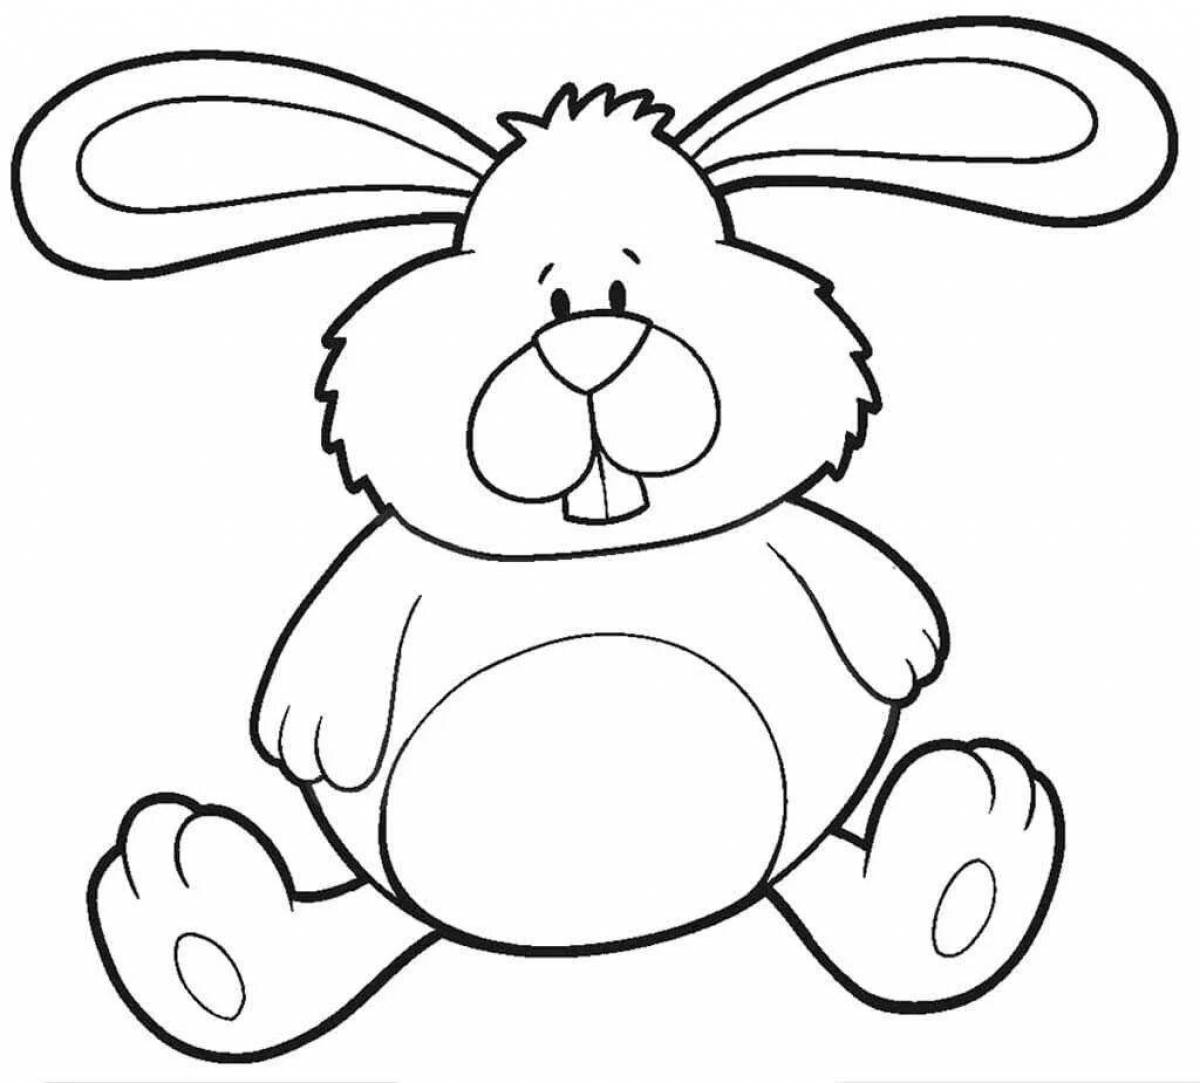 Snuggly coloring page bunny для детей 3 4